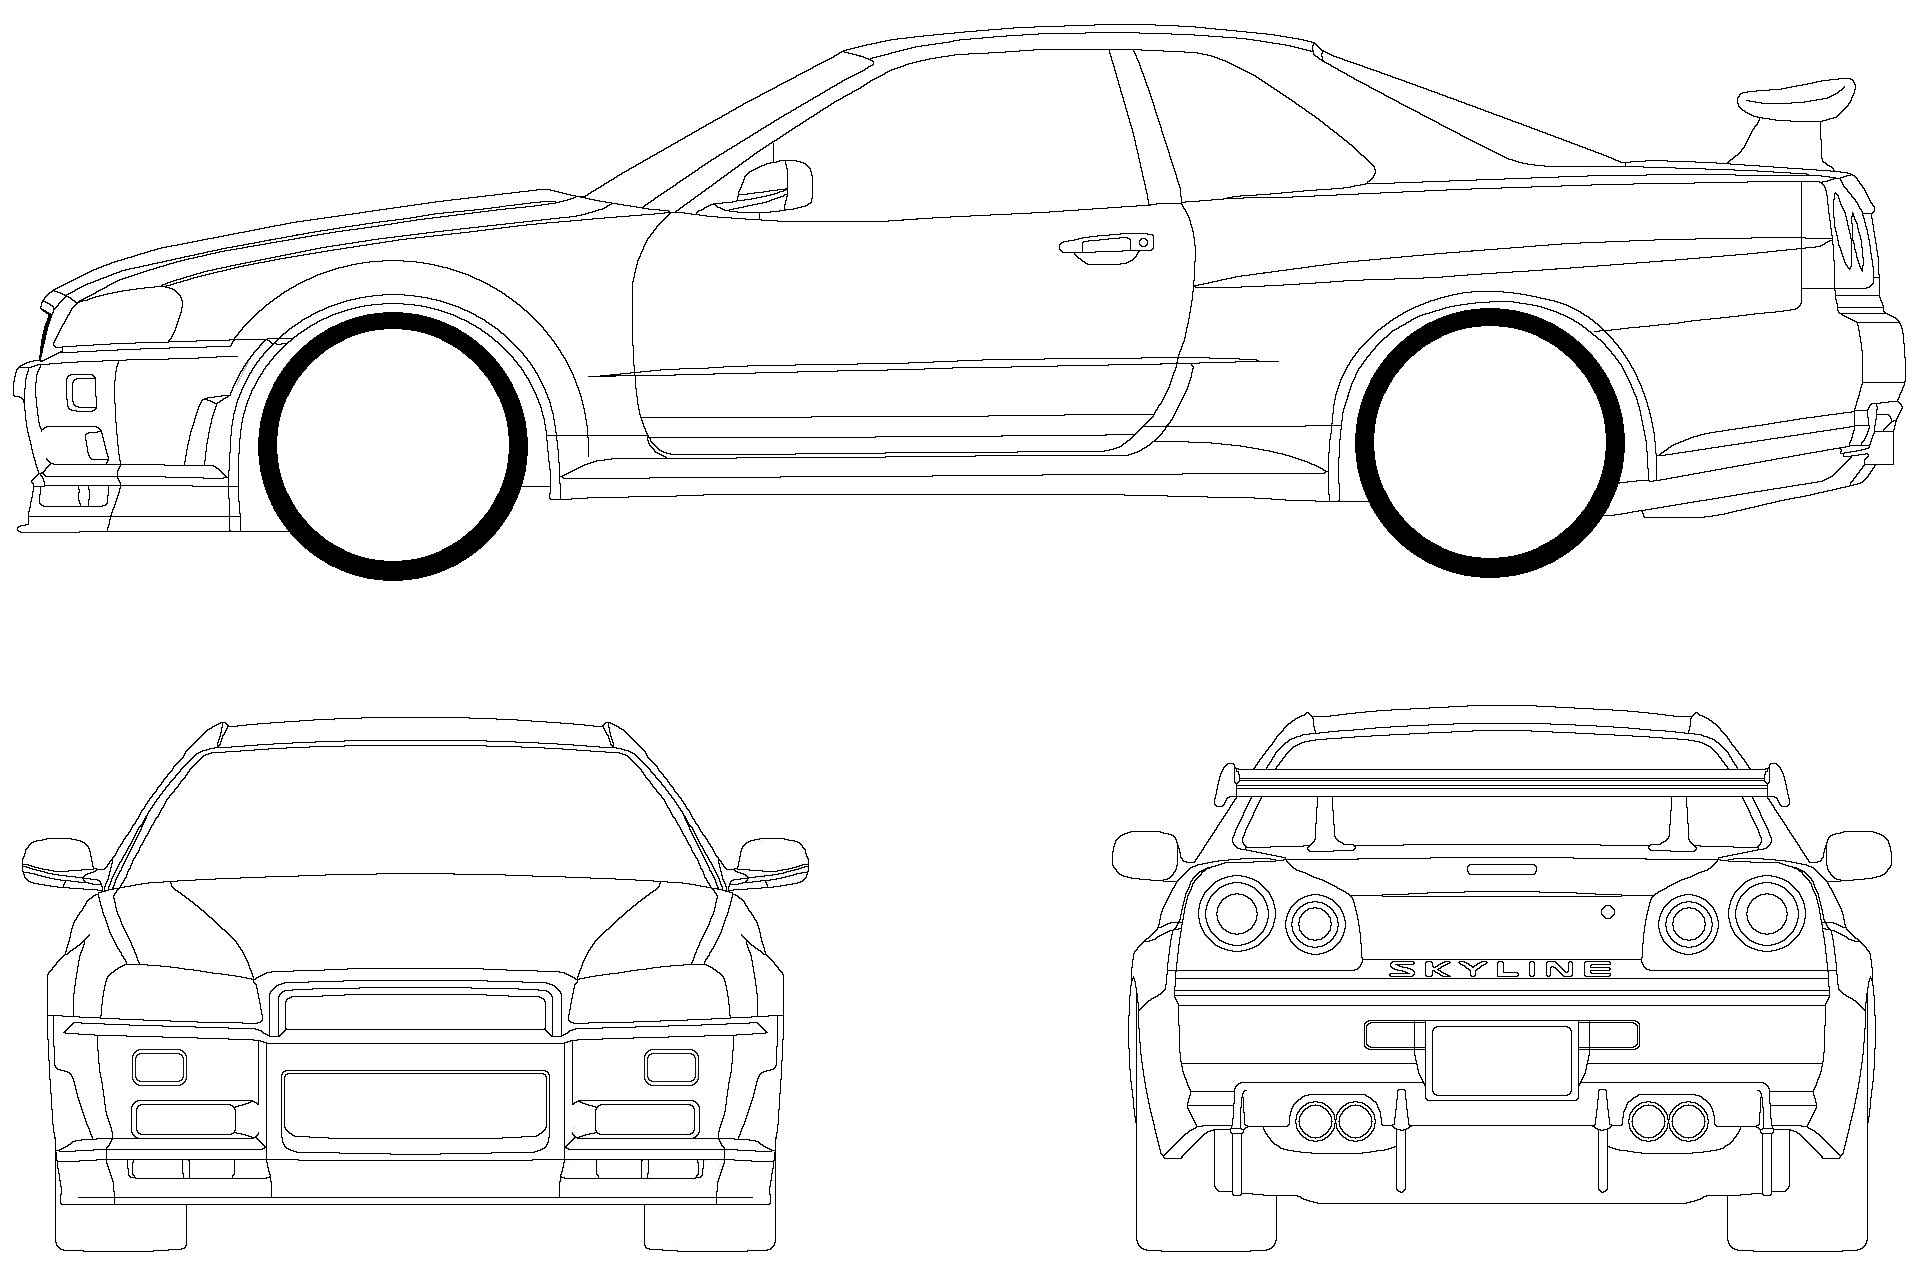 Nissan skyline gtr r34 blueprints #1